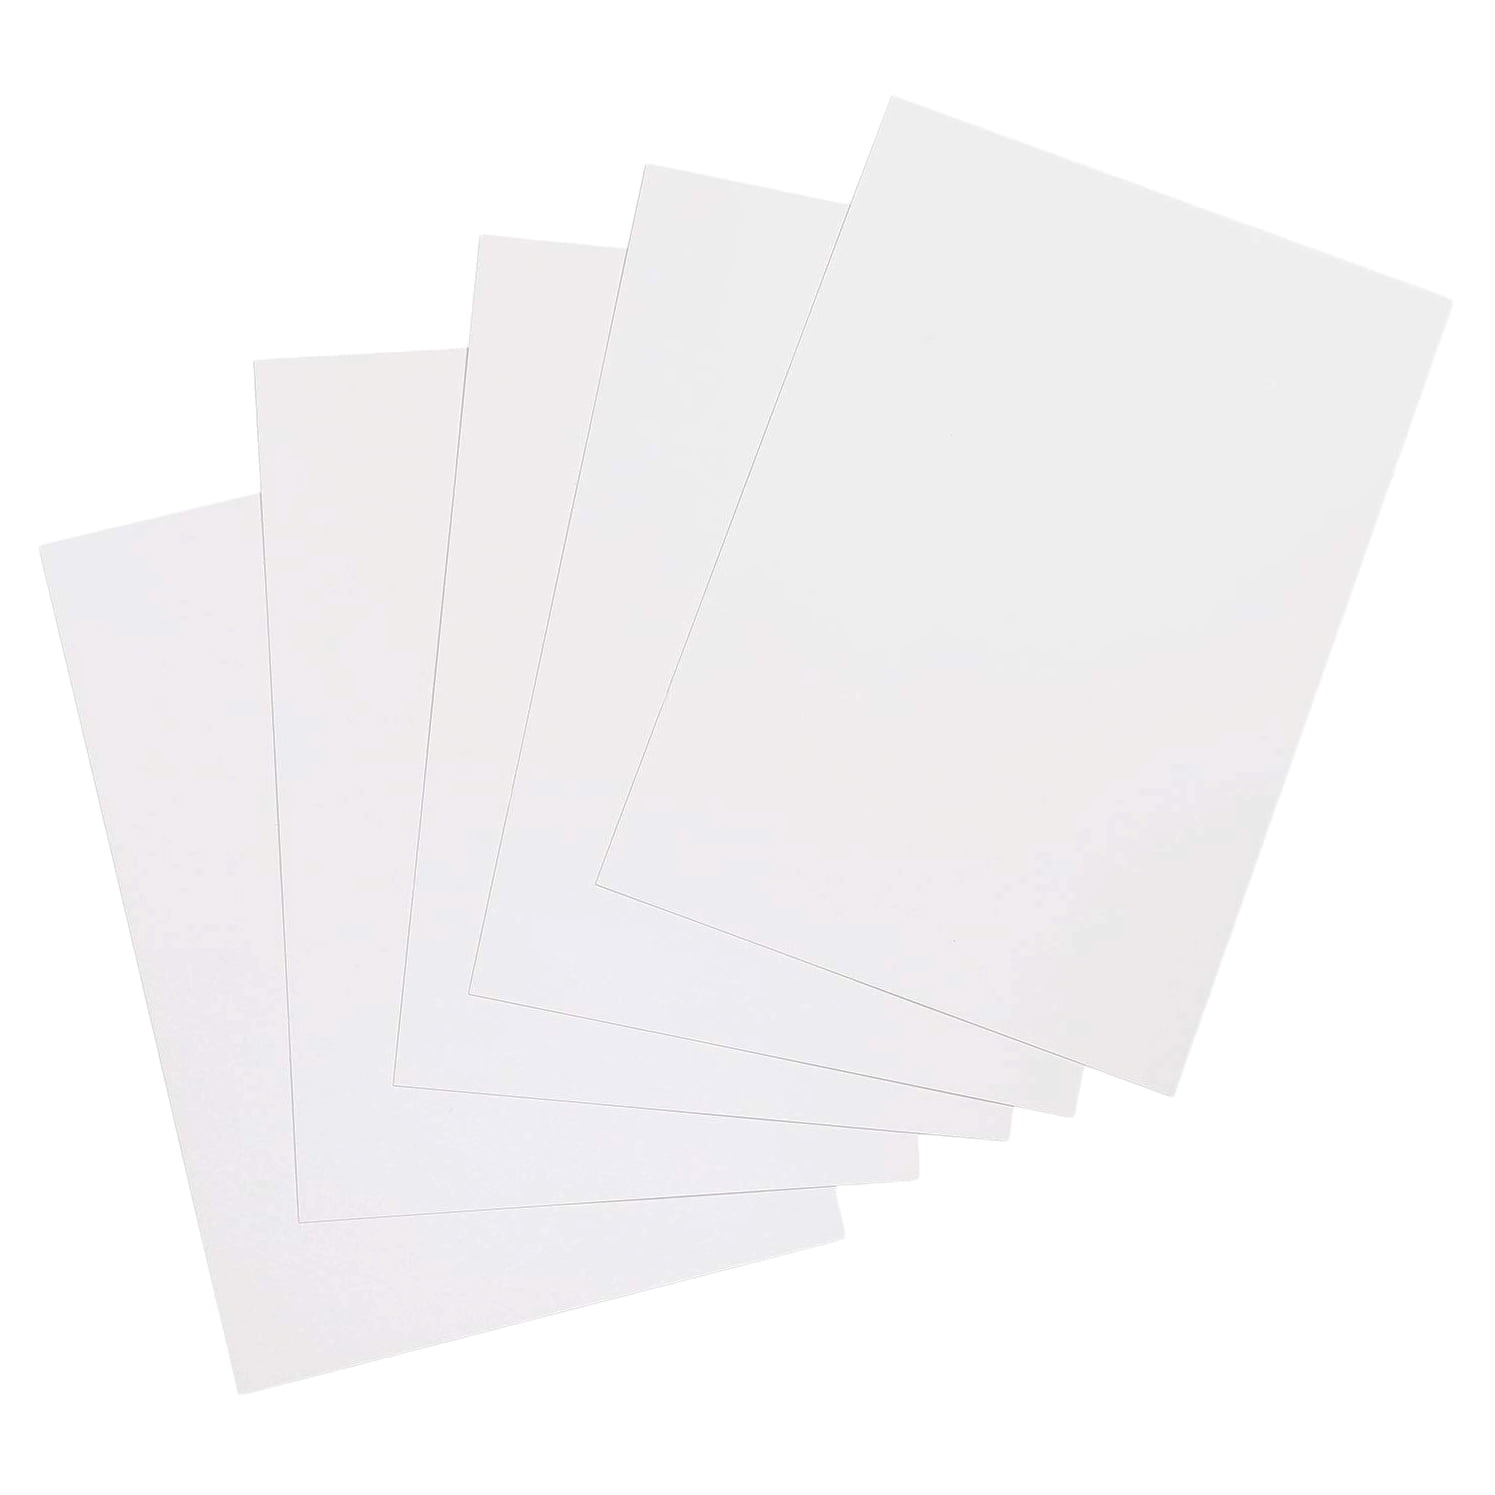 White Cleanroom Paper 11 x 17 24 lb.